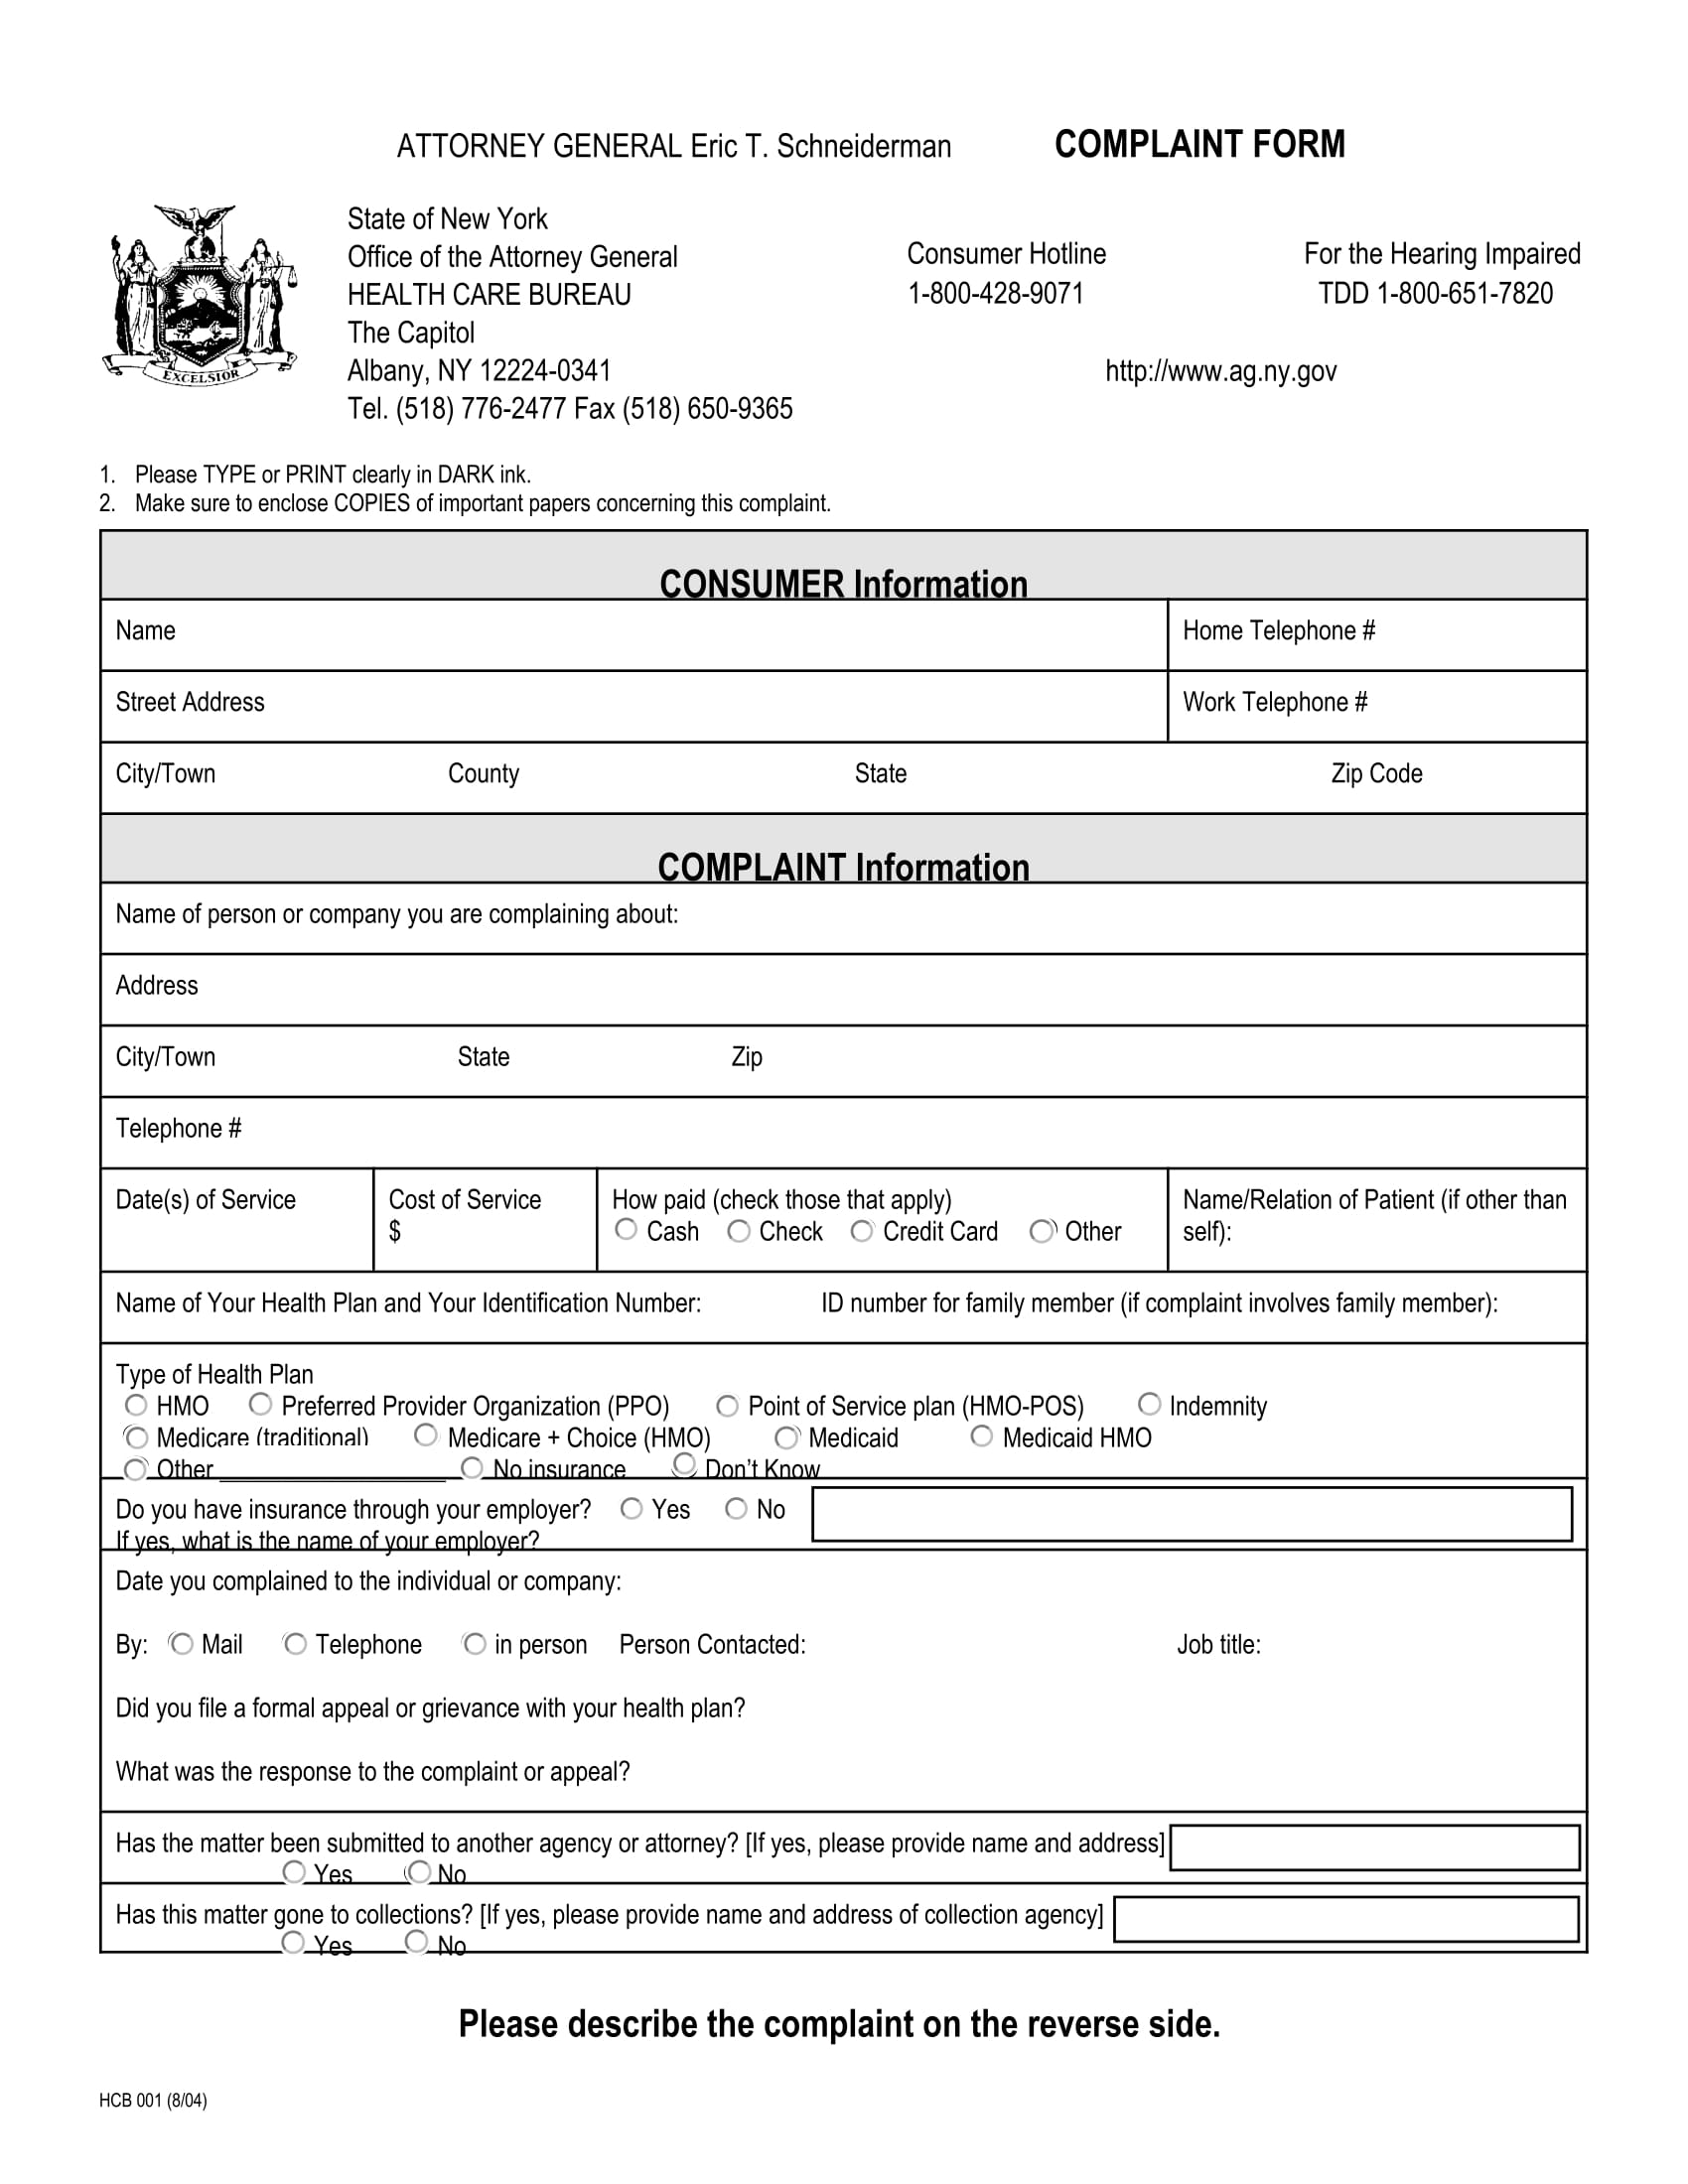 health care bureau complaint form 1